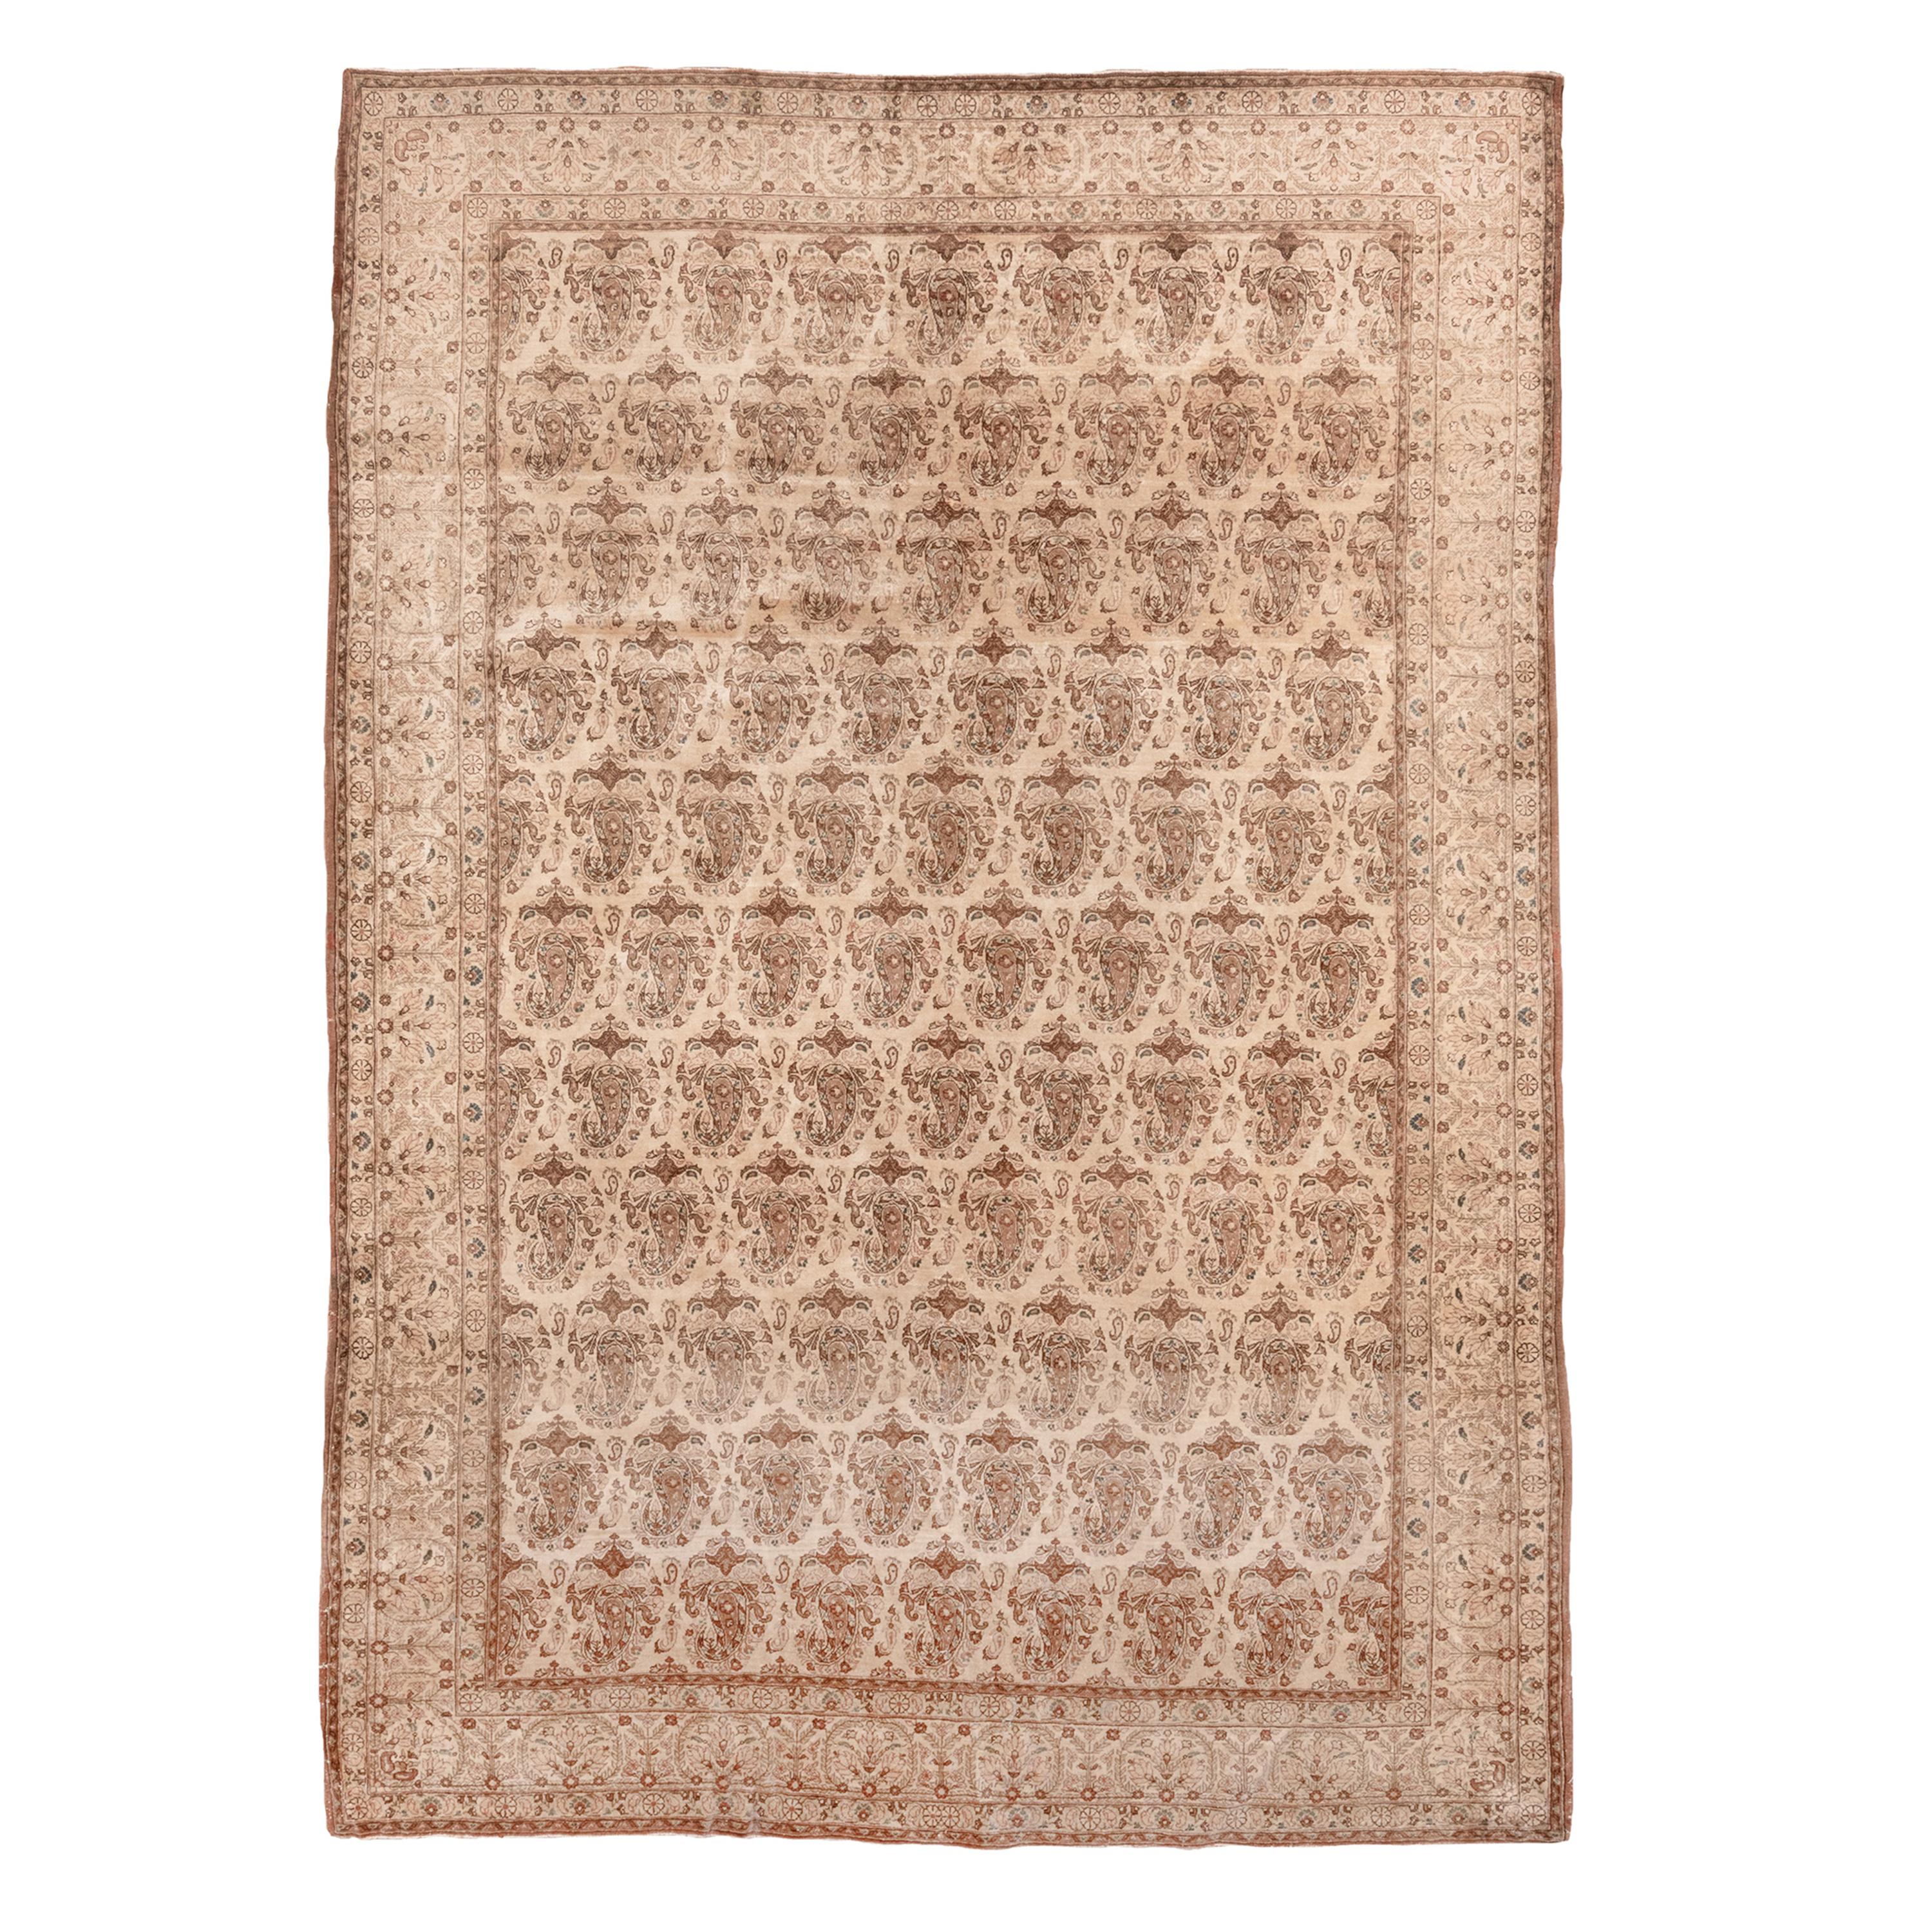 Fine Antique Persian Qum Carpet with Paisley Allover Design, Teal Accents For Sale